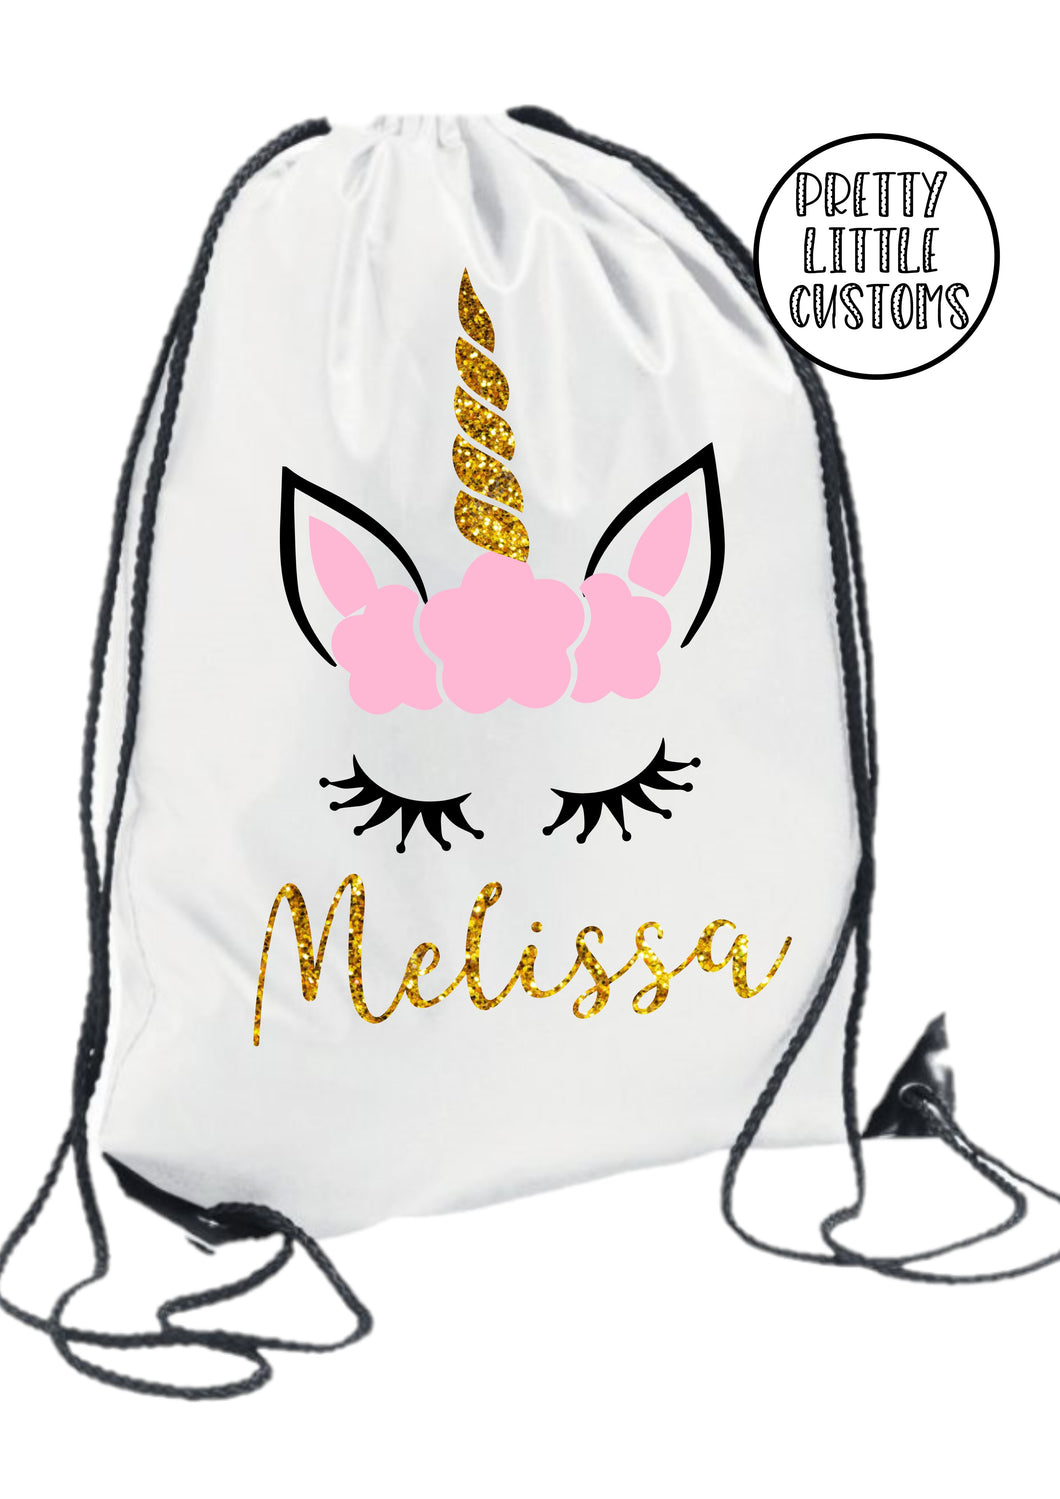 Personalised kids name gym bag/PE bag/school bag - glitter unicorn